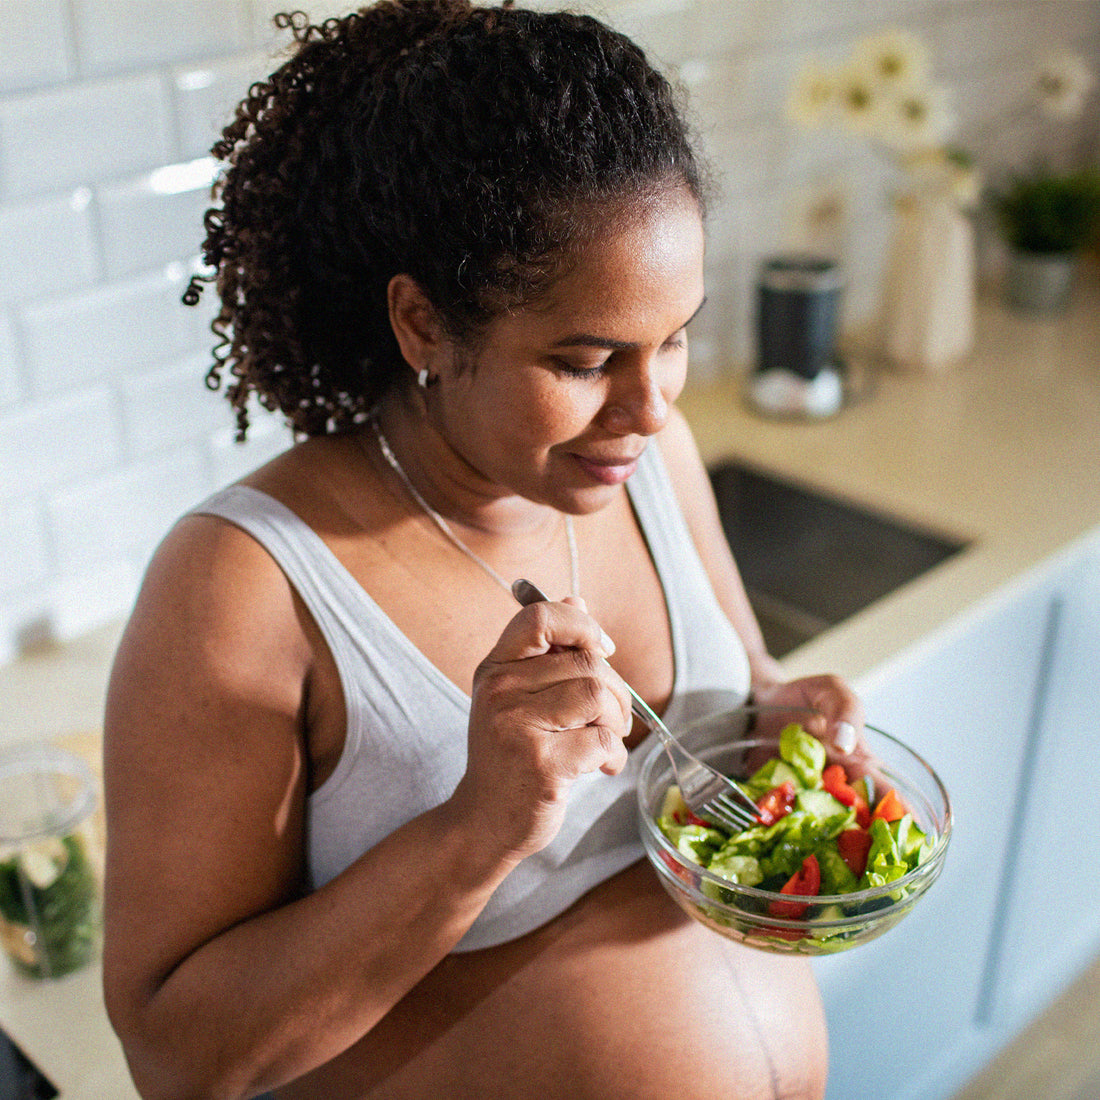 Femme enceinte mange une salade